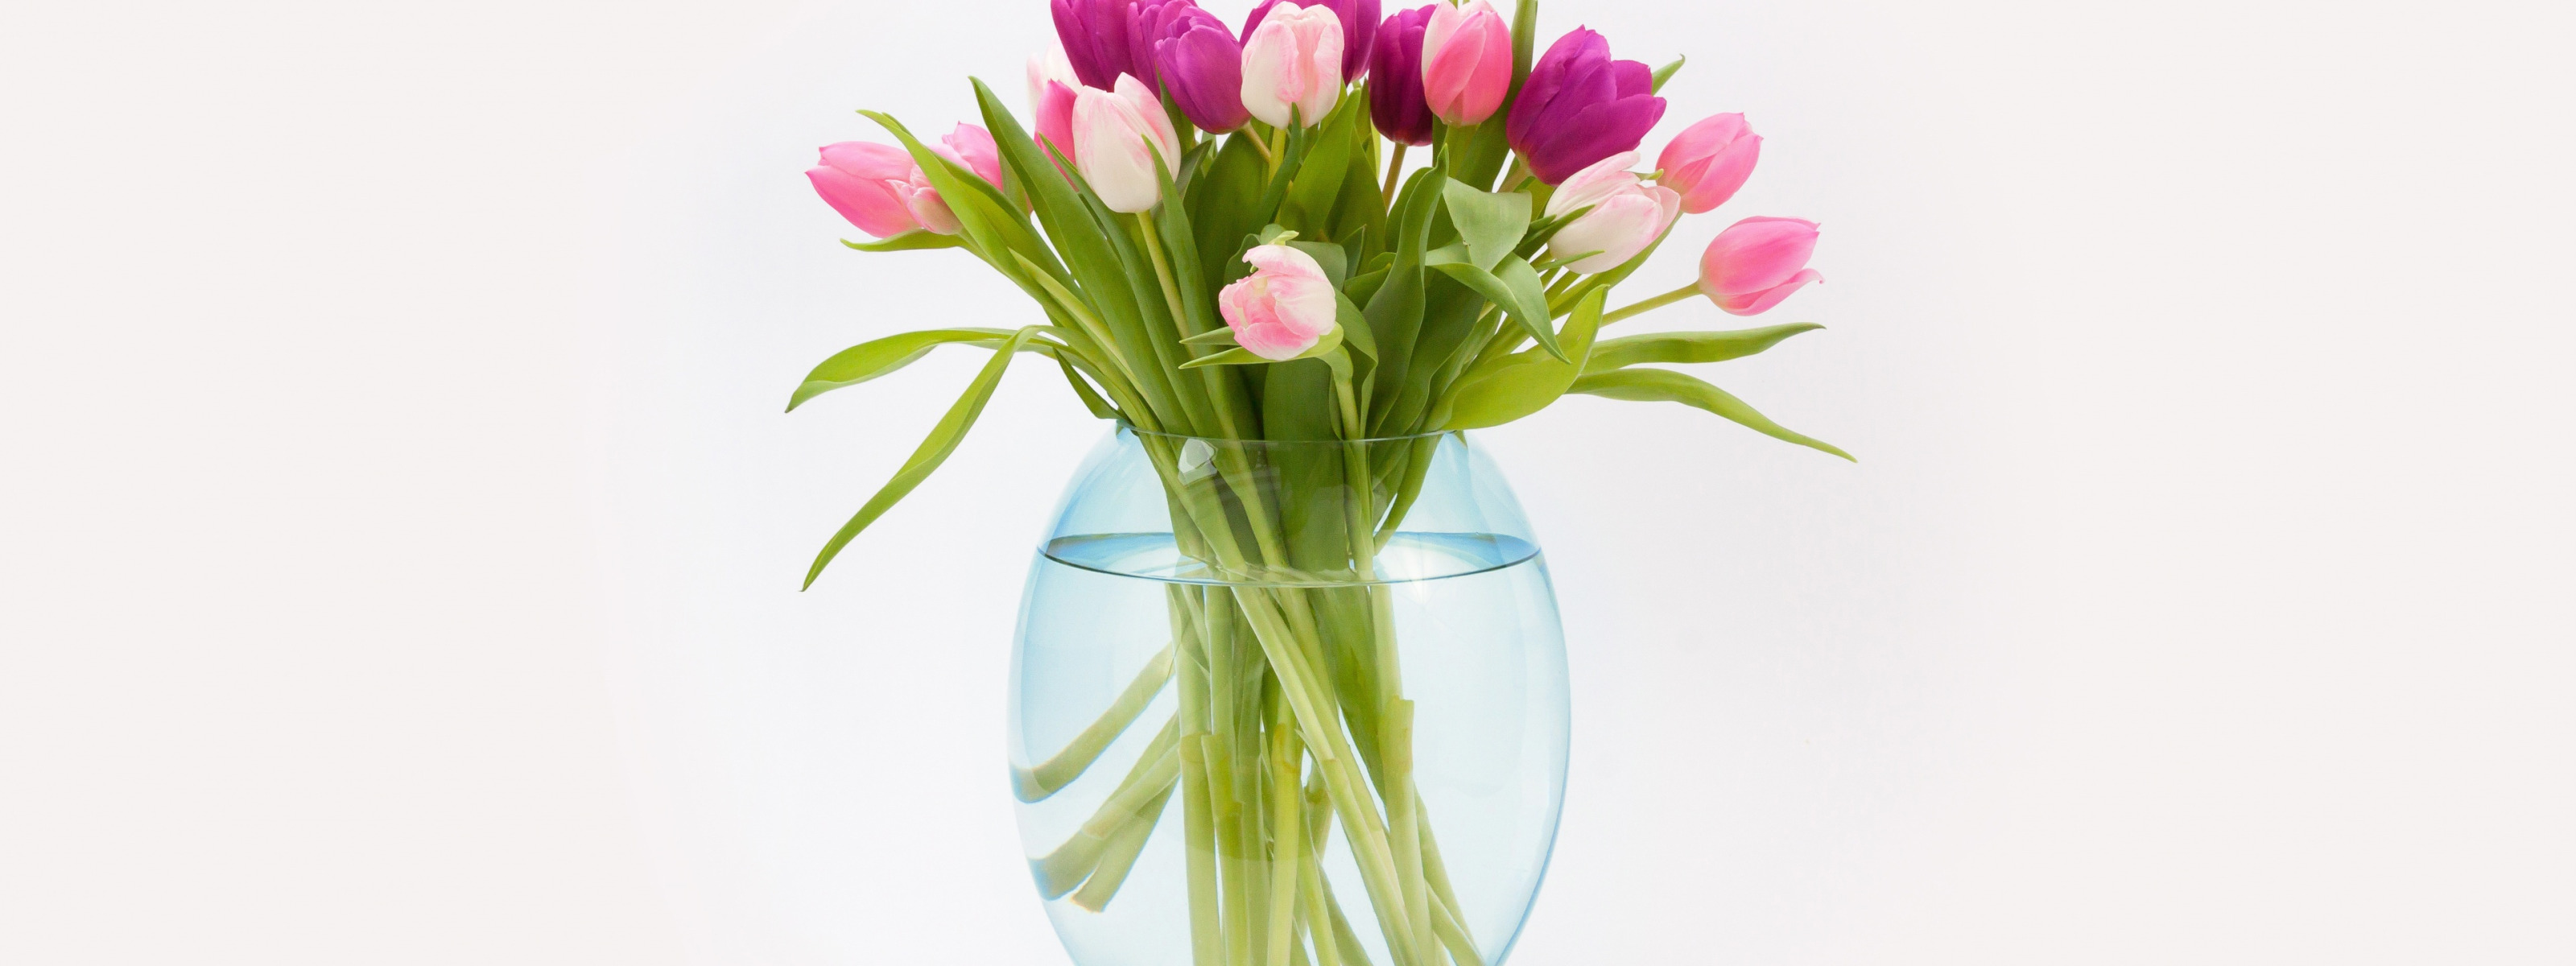 Тюльпаны в вазе фон